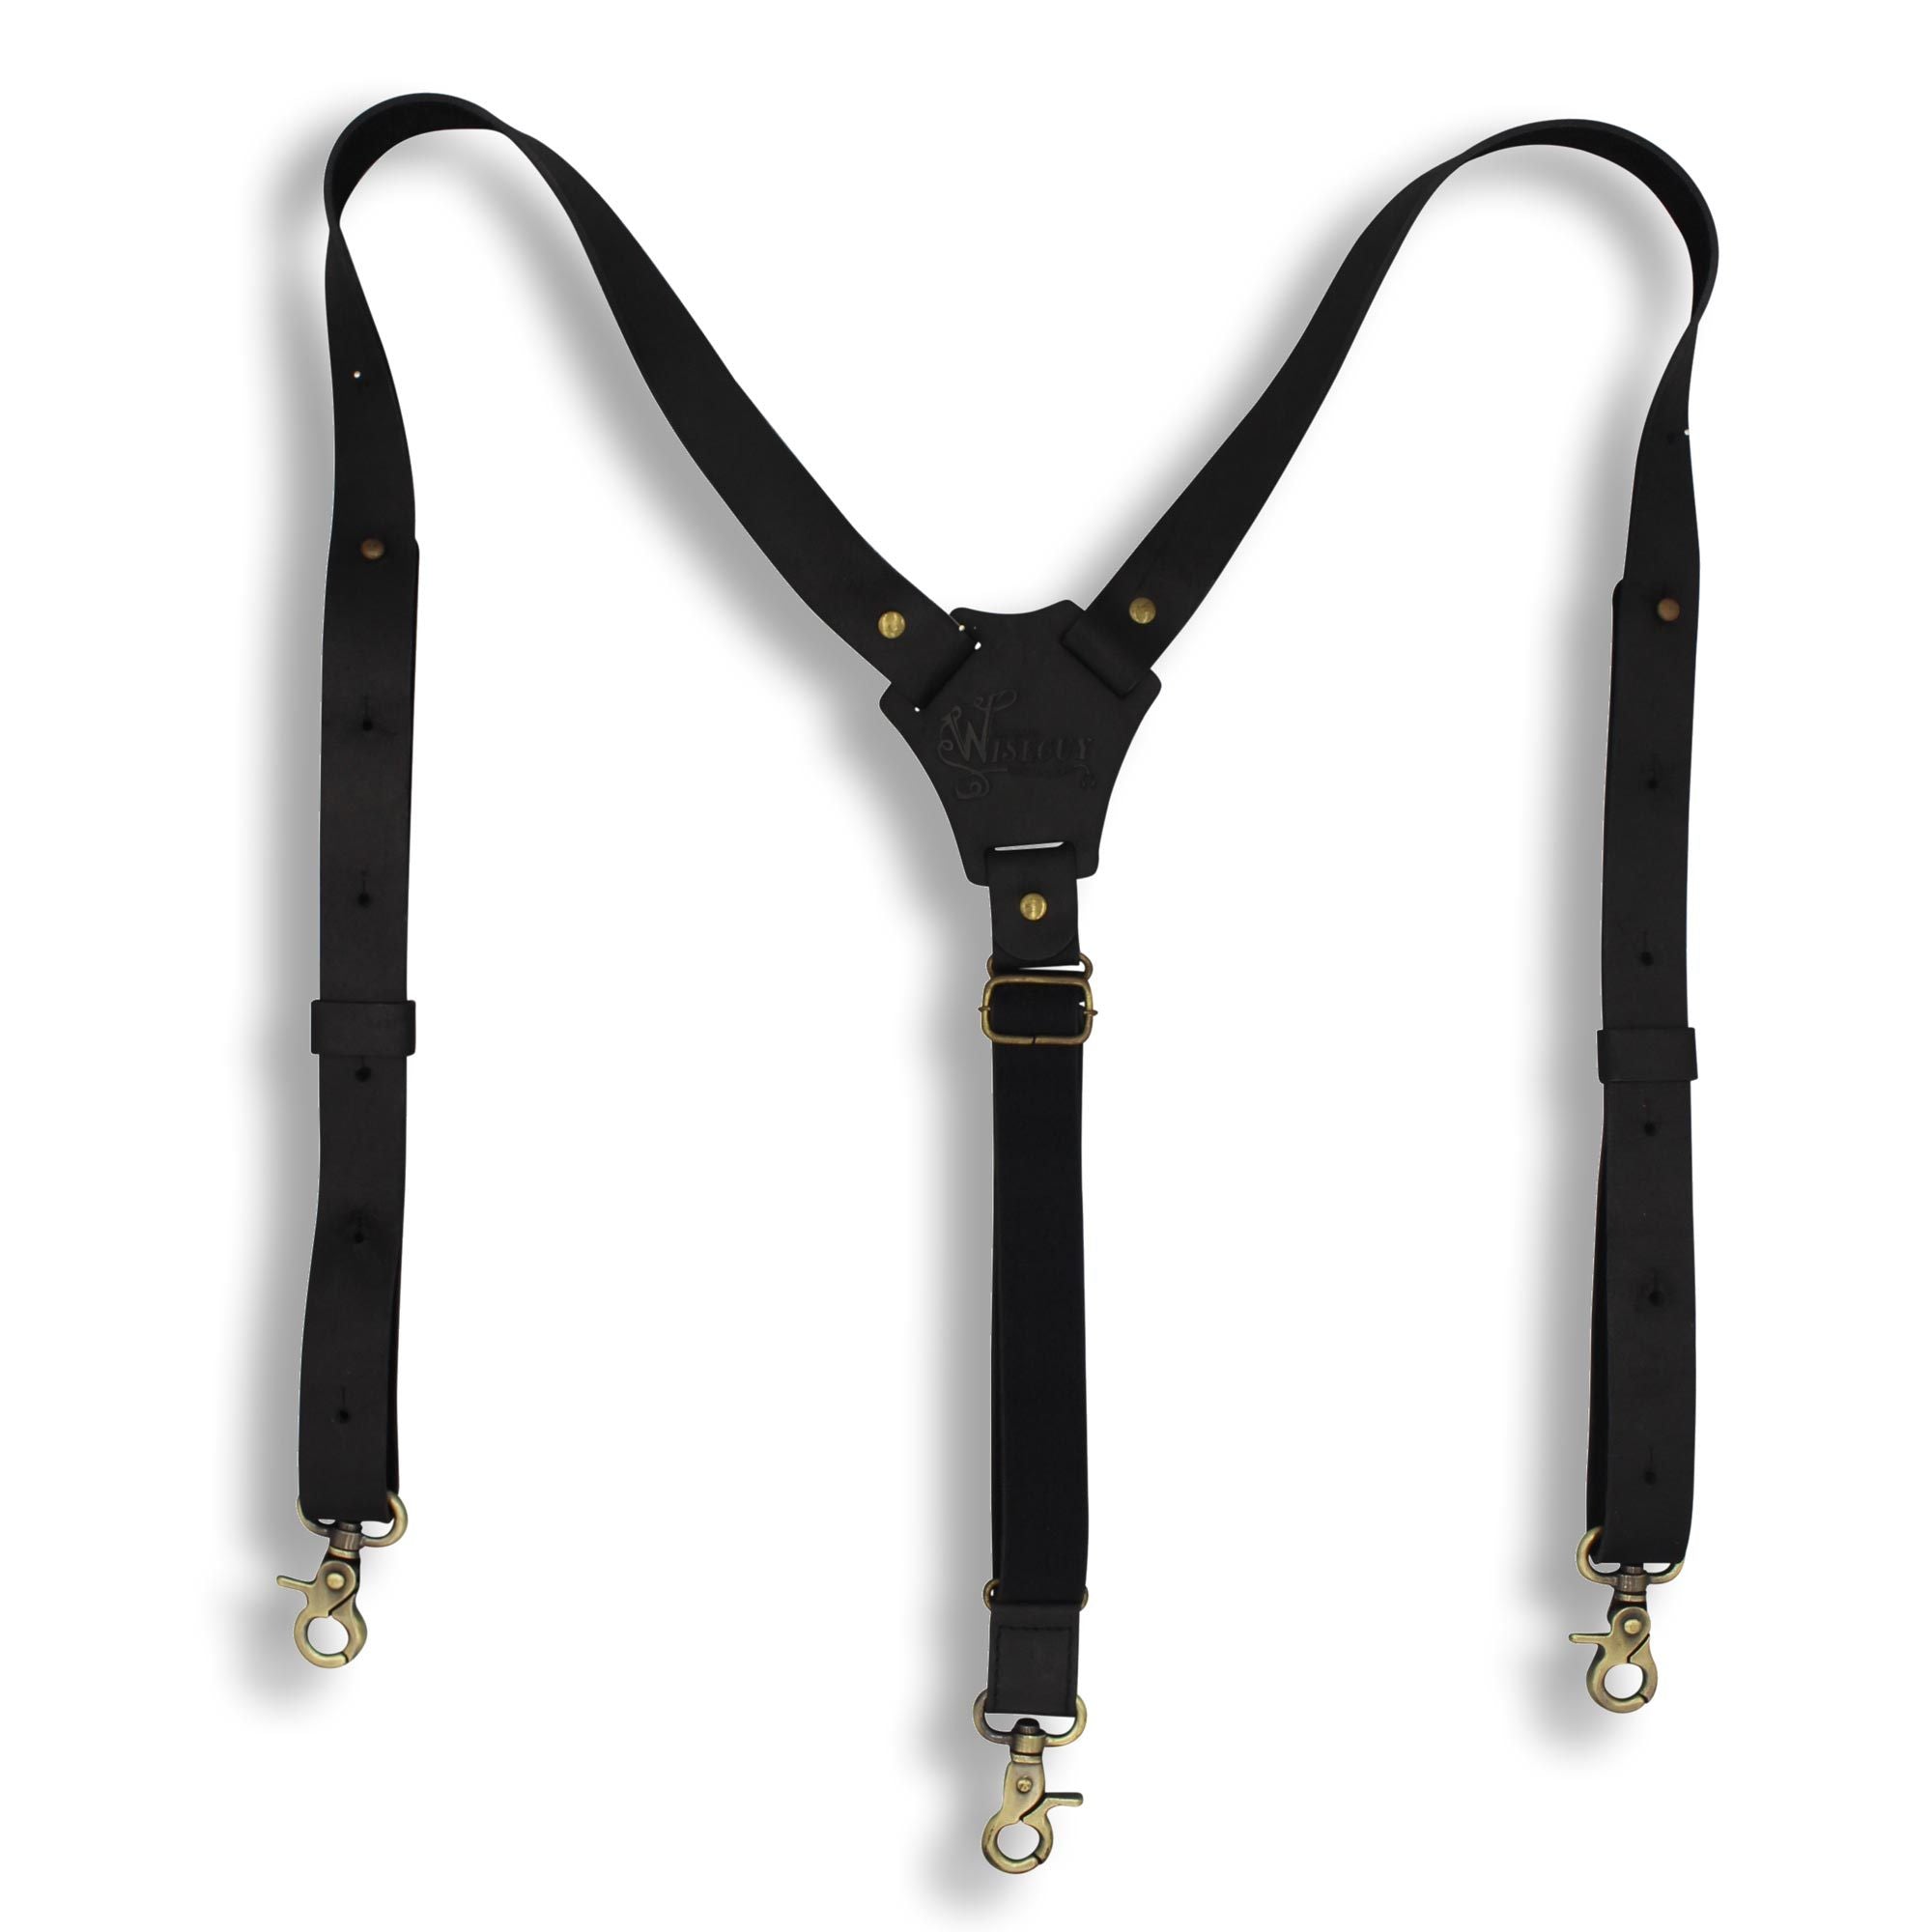 Flex Black Leather Suspenders with Elastic Black adjustable back Strap - Wiseguy Suspenders